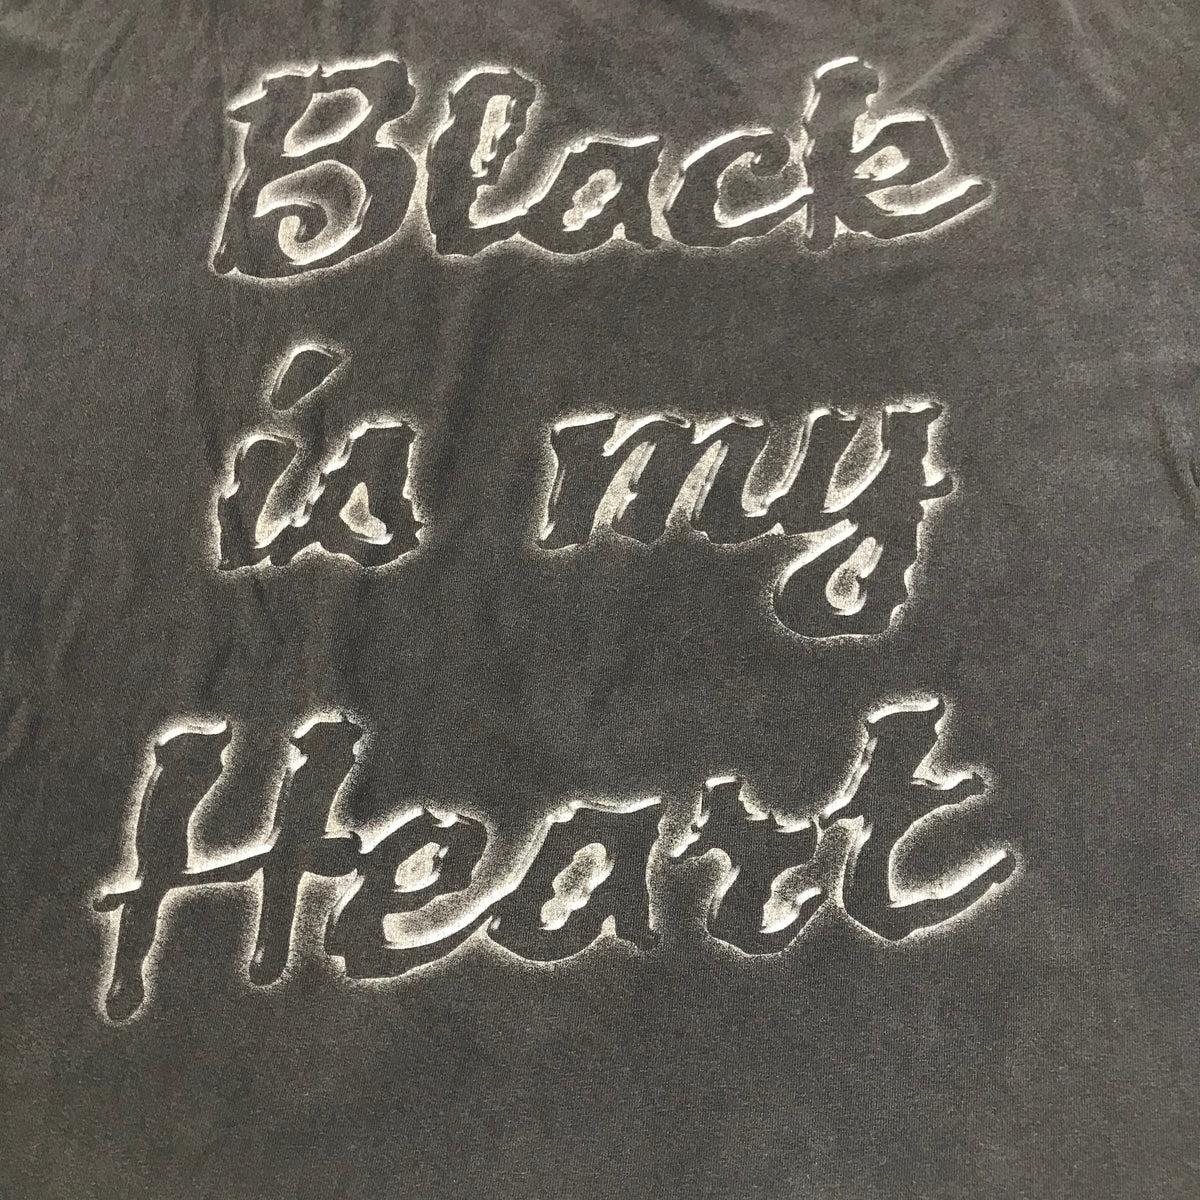 Vintage Cradle Of Filth &quot;Black is My Heart&quot; T-Shirt - jointcustodydc